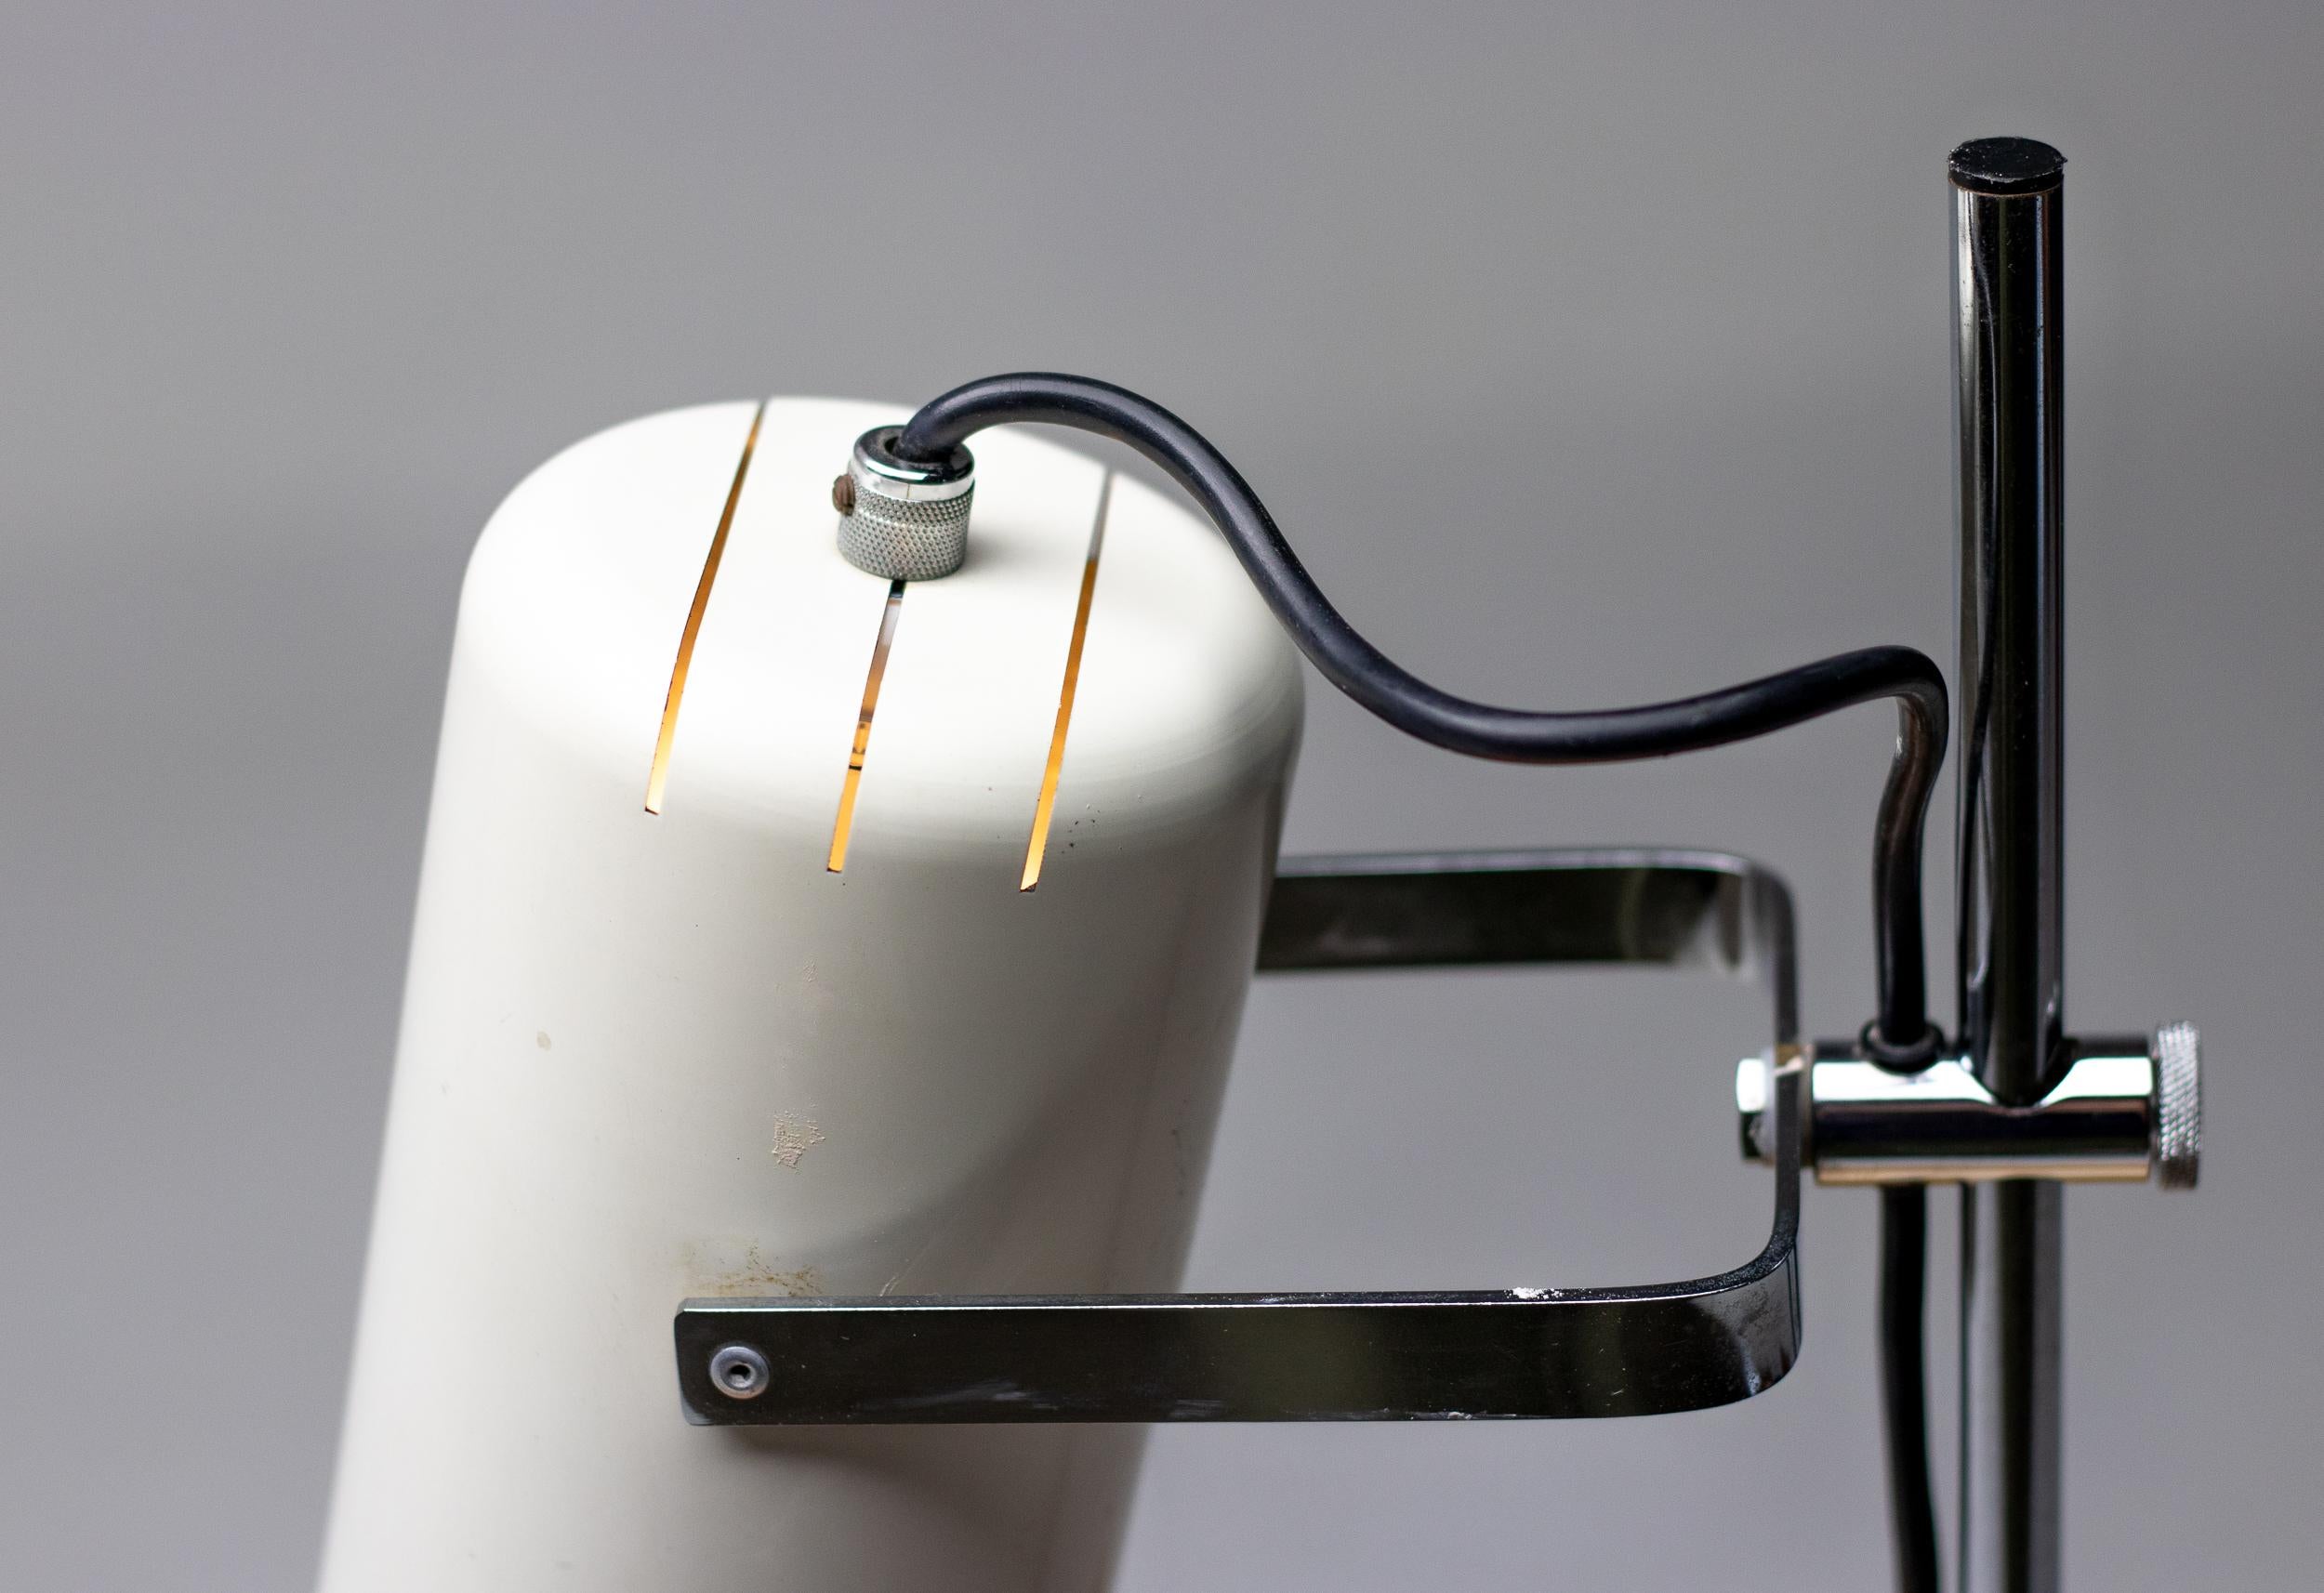 Adjustable desk lamp by Stilnovo.
Stilnovo, a hallmark of the mid-20th-century Italian design movement, seamlessly marries form and function. Emerging in the post-World War II era, Stilnovo reflect an avant-garde approach to lighting design.